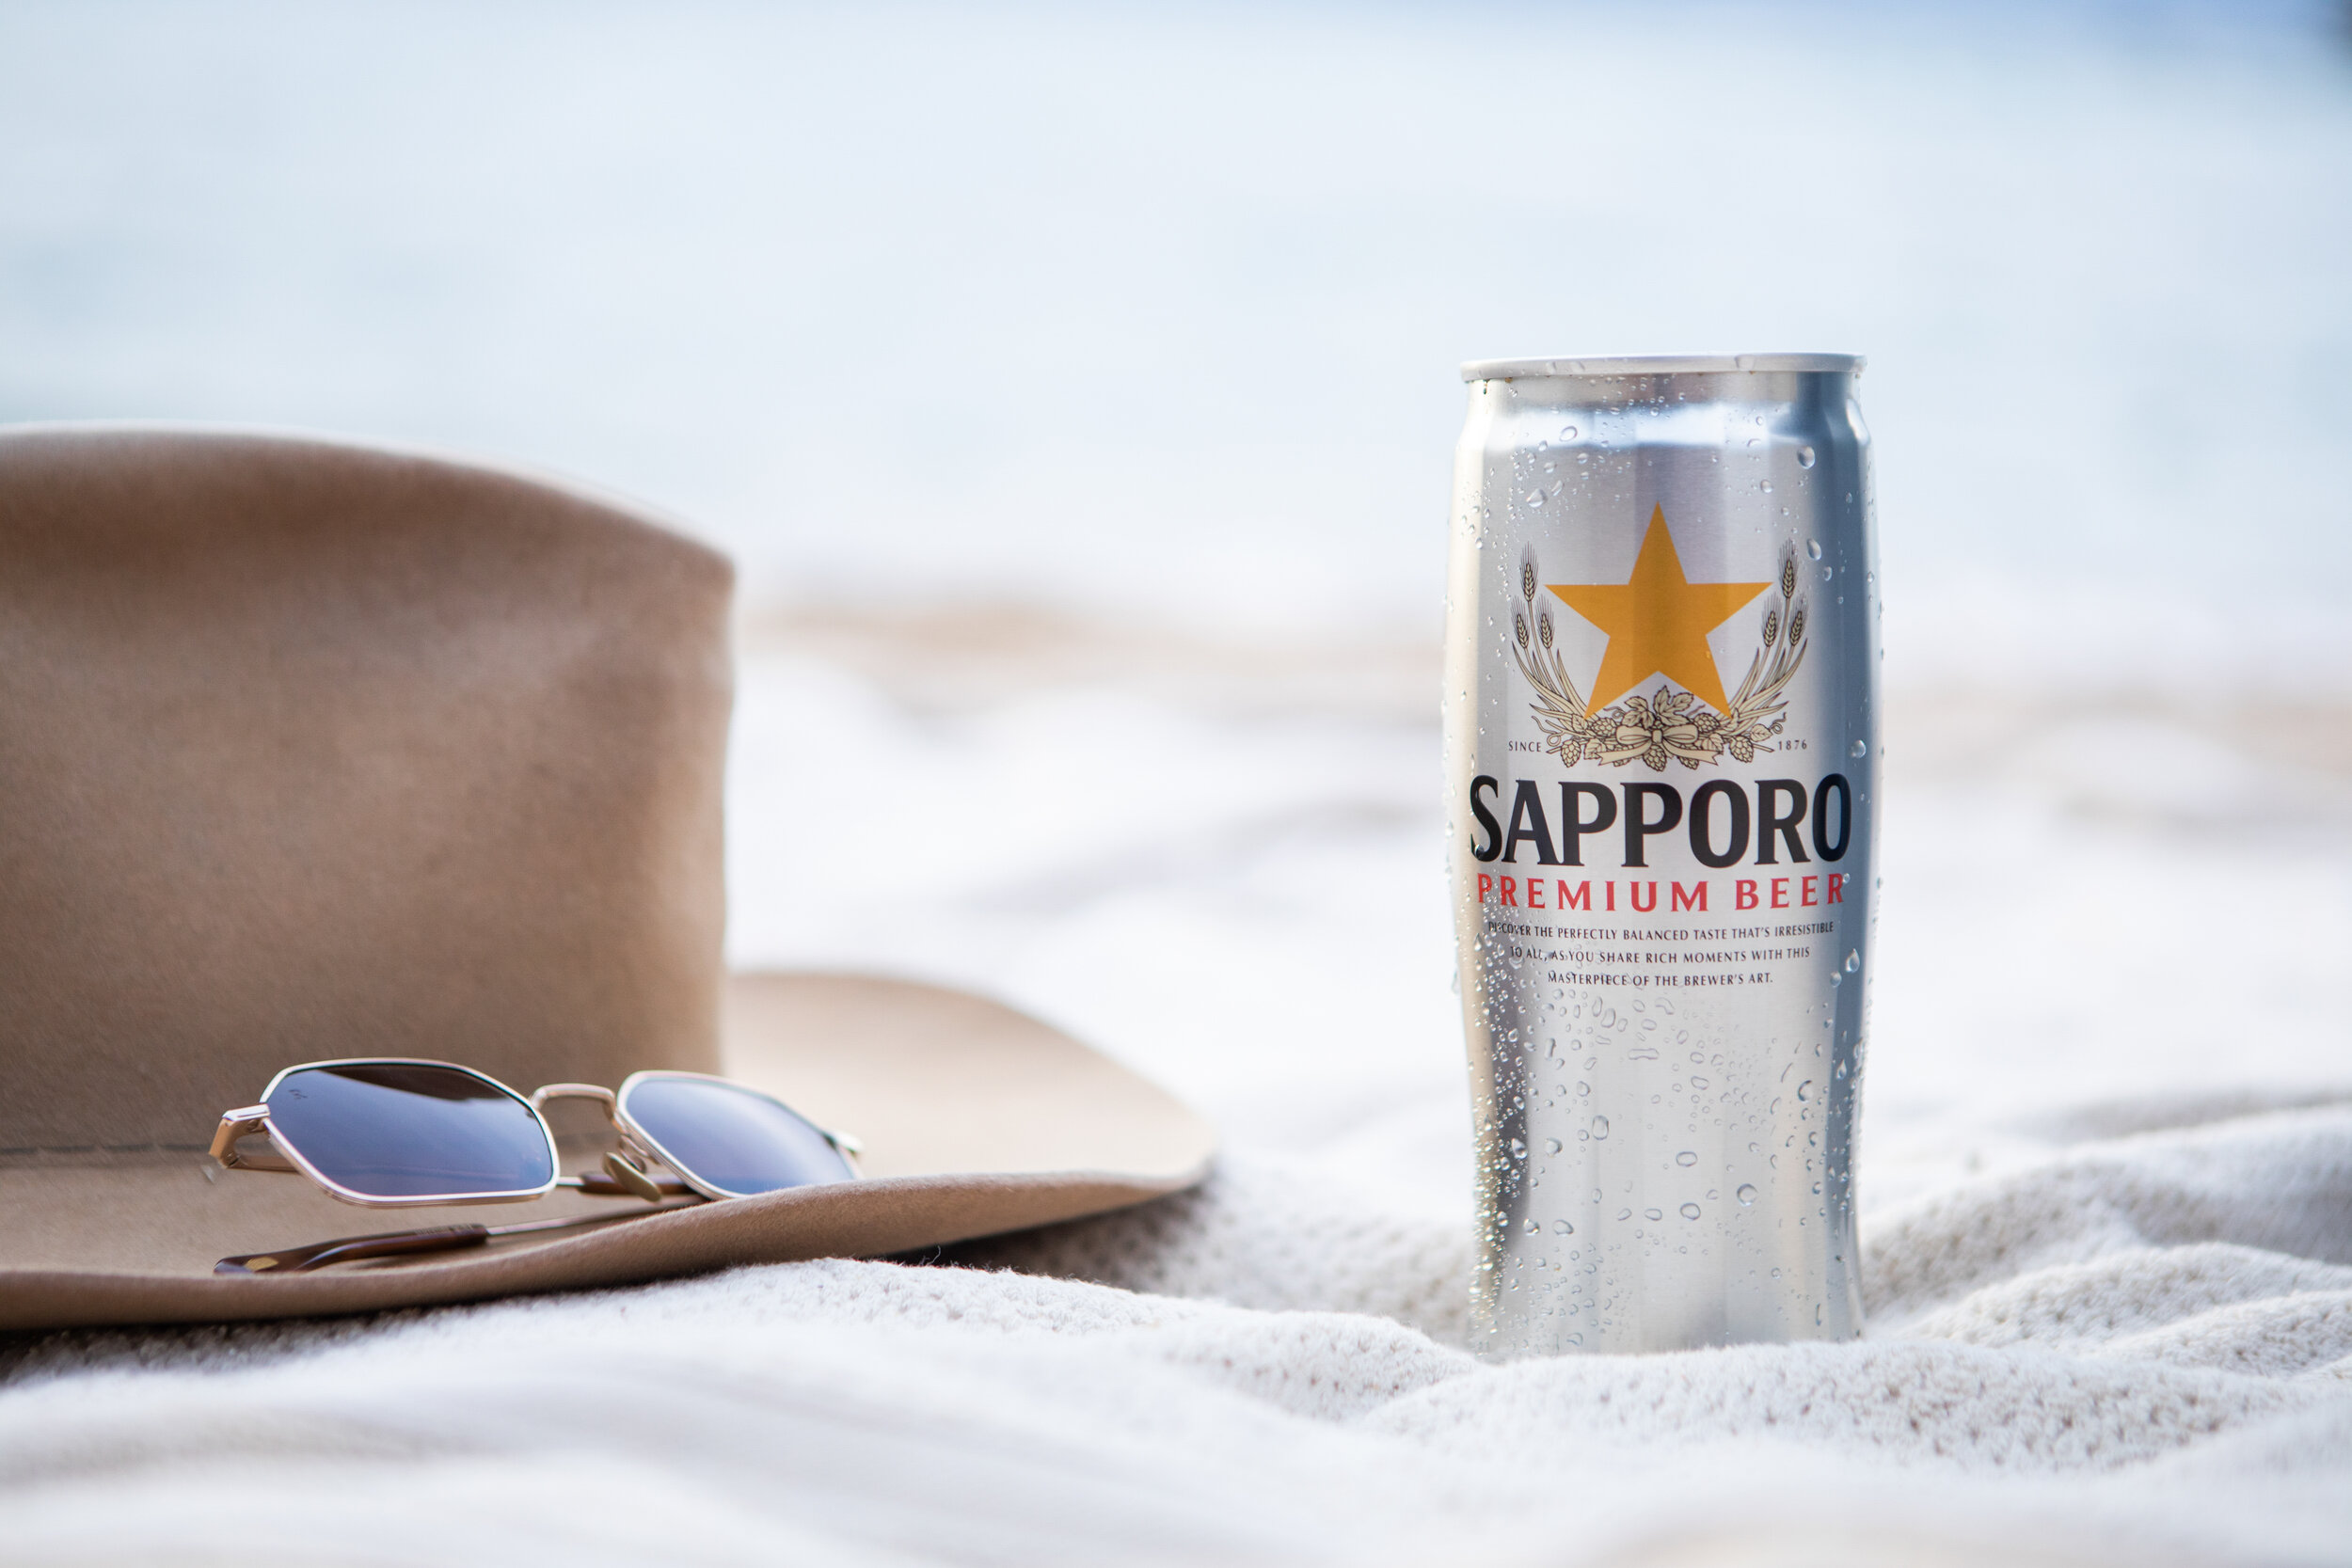 042321_Sapporo Beverage Brand Images_009.jpg